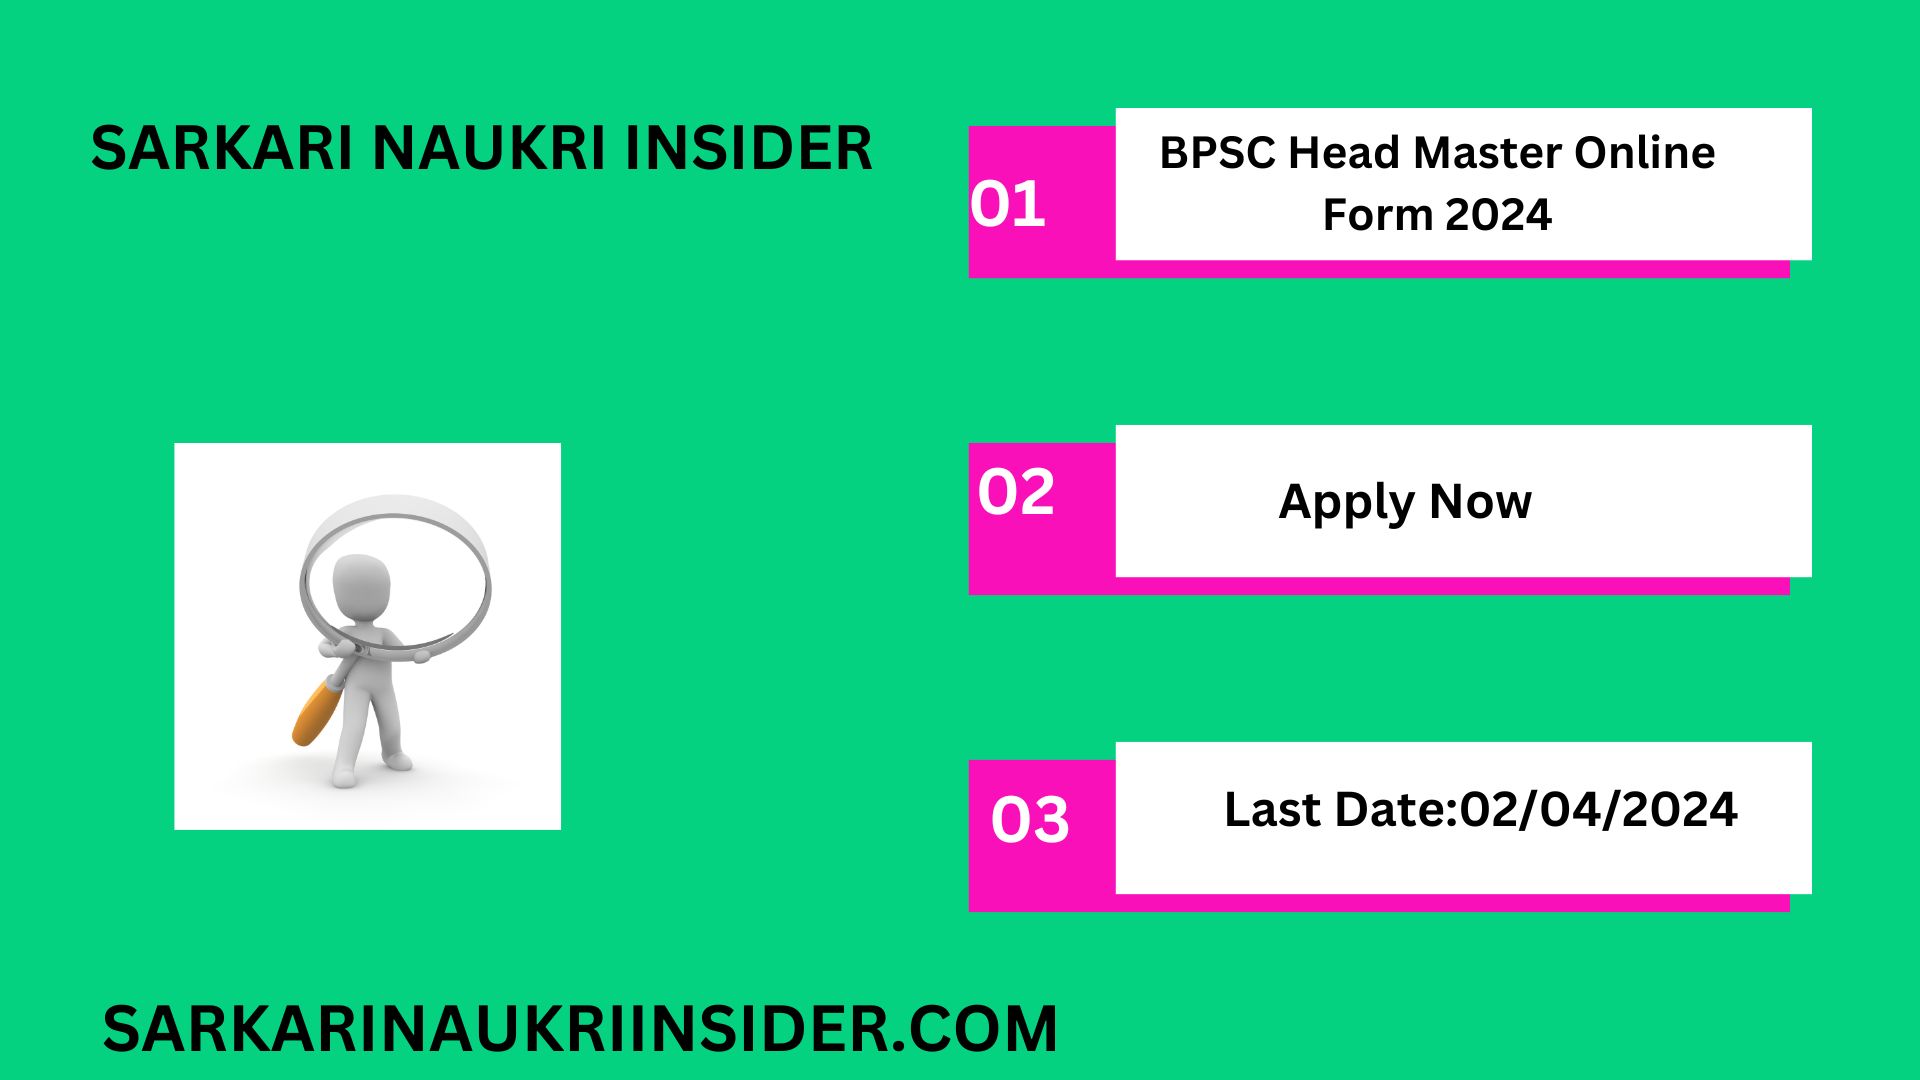 BPSC Head Master Online Form 2024